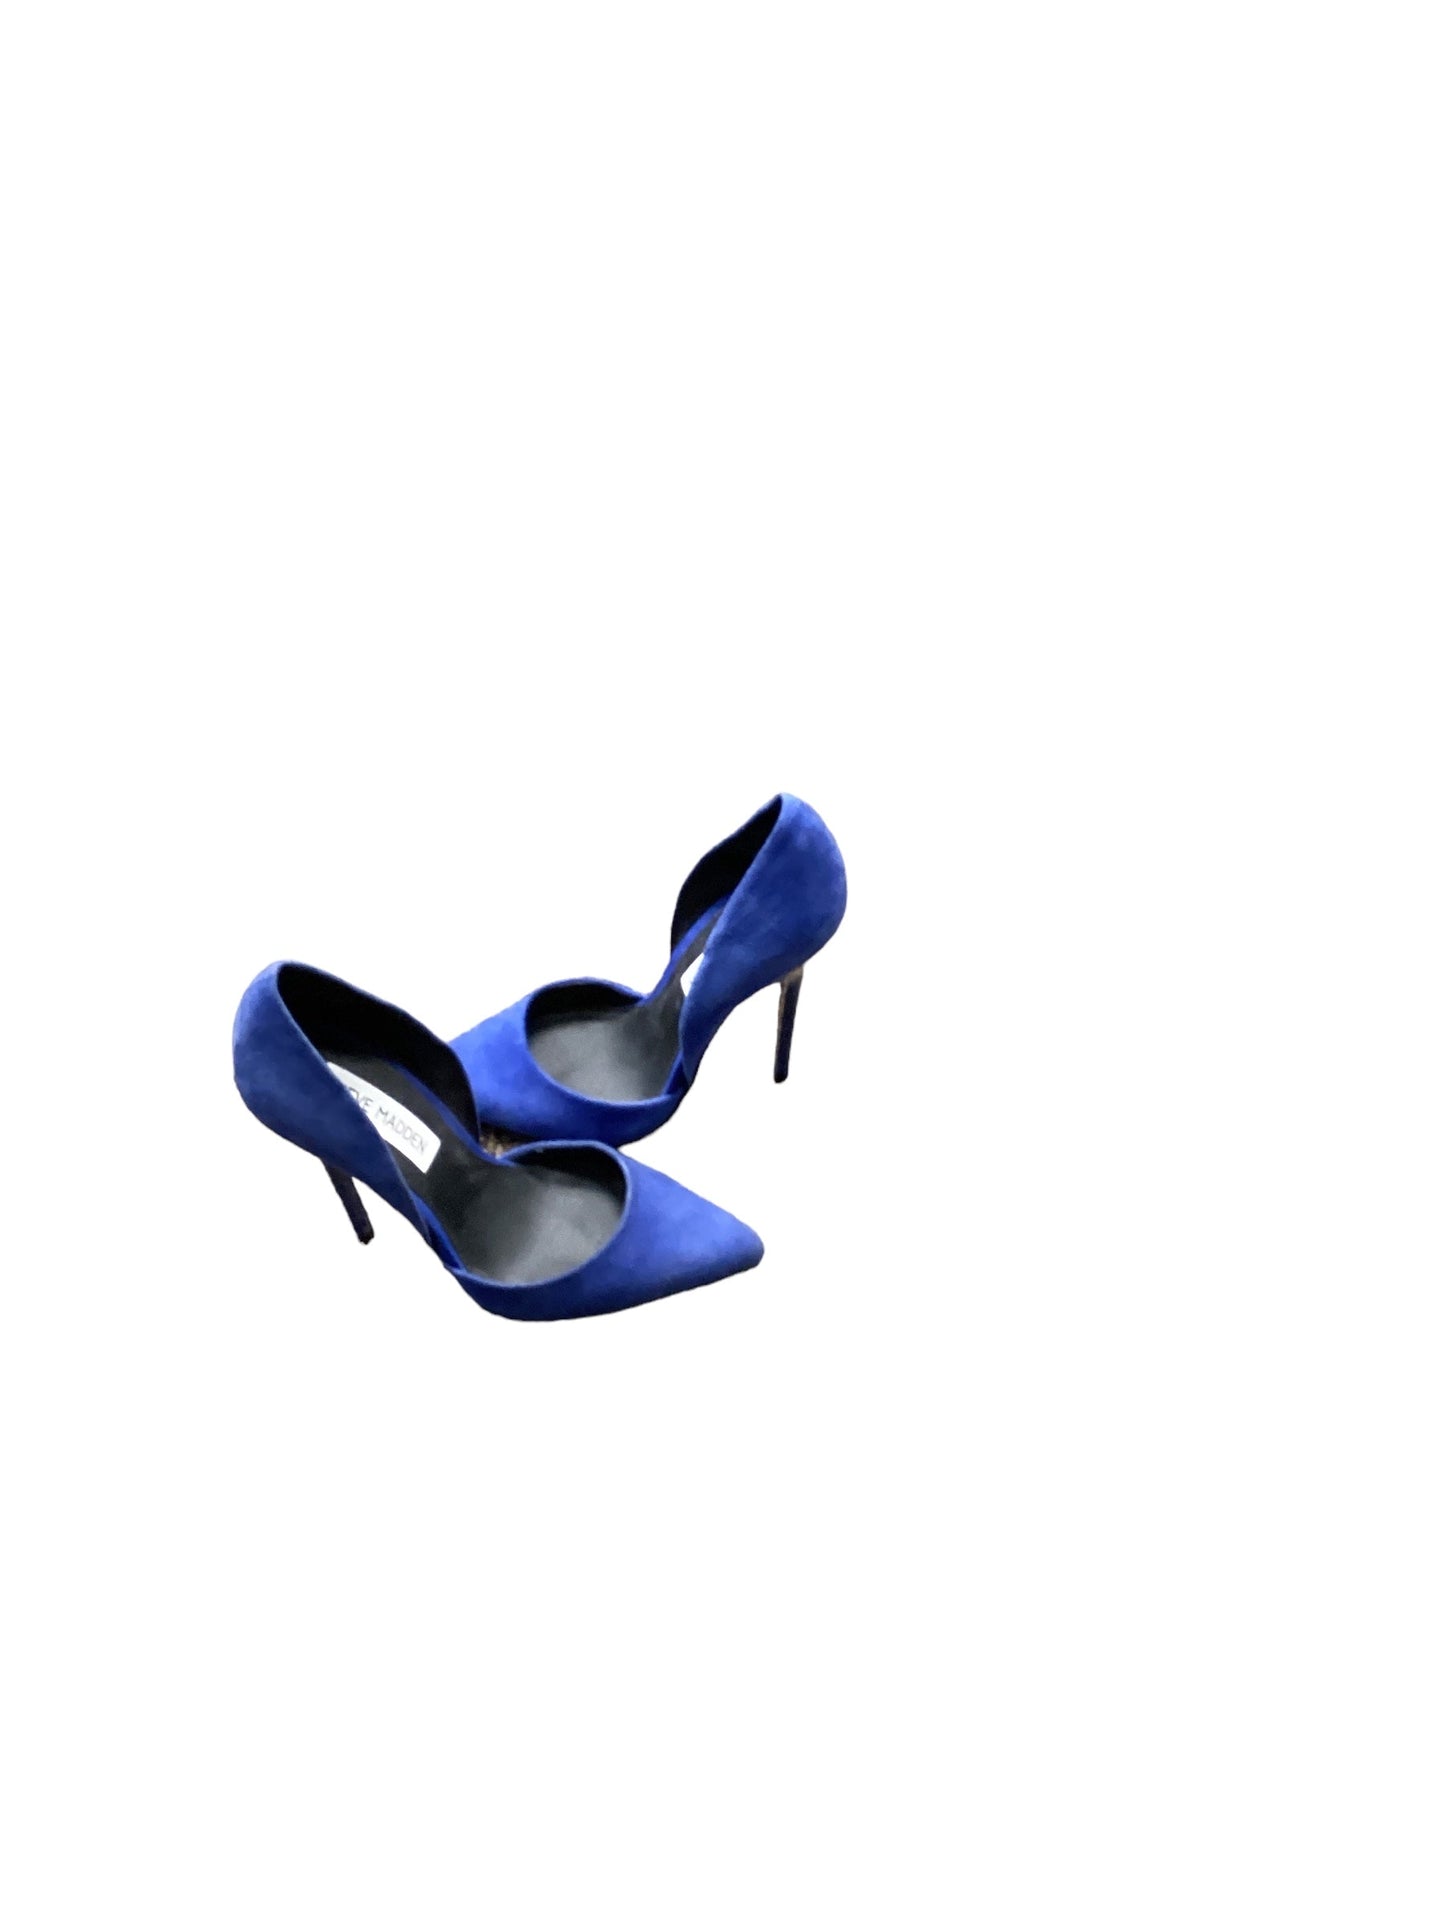 Blue Sandals Heels Stiletto Steve Madden, Size 5.5